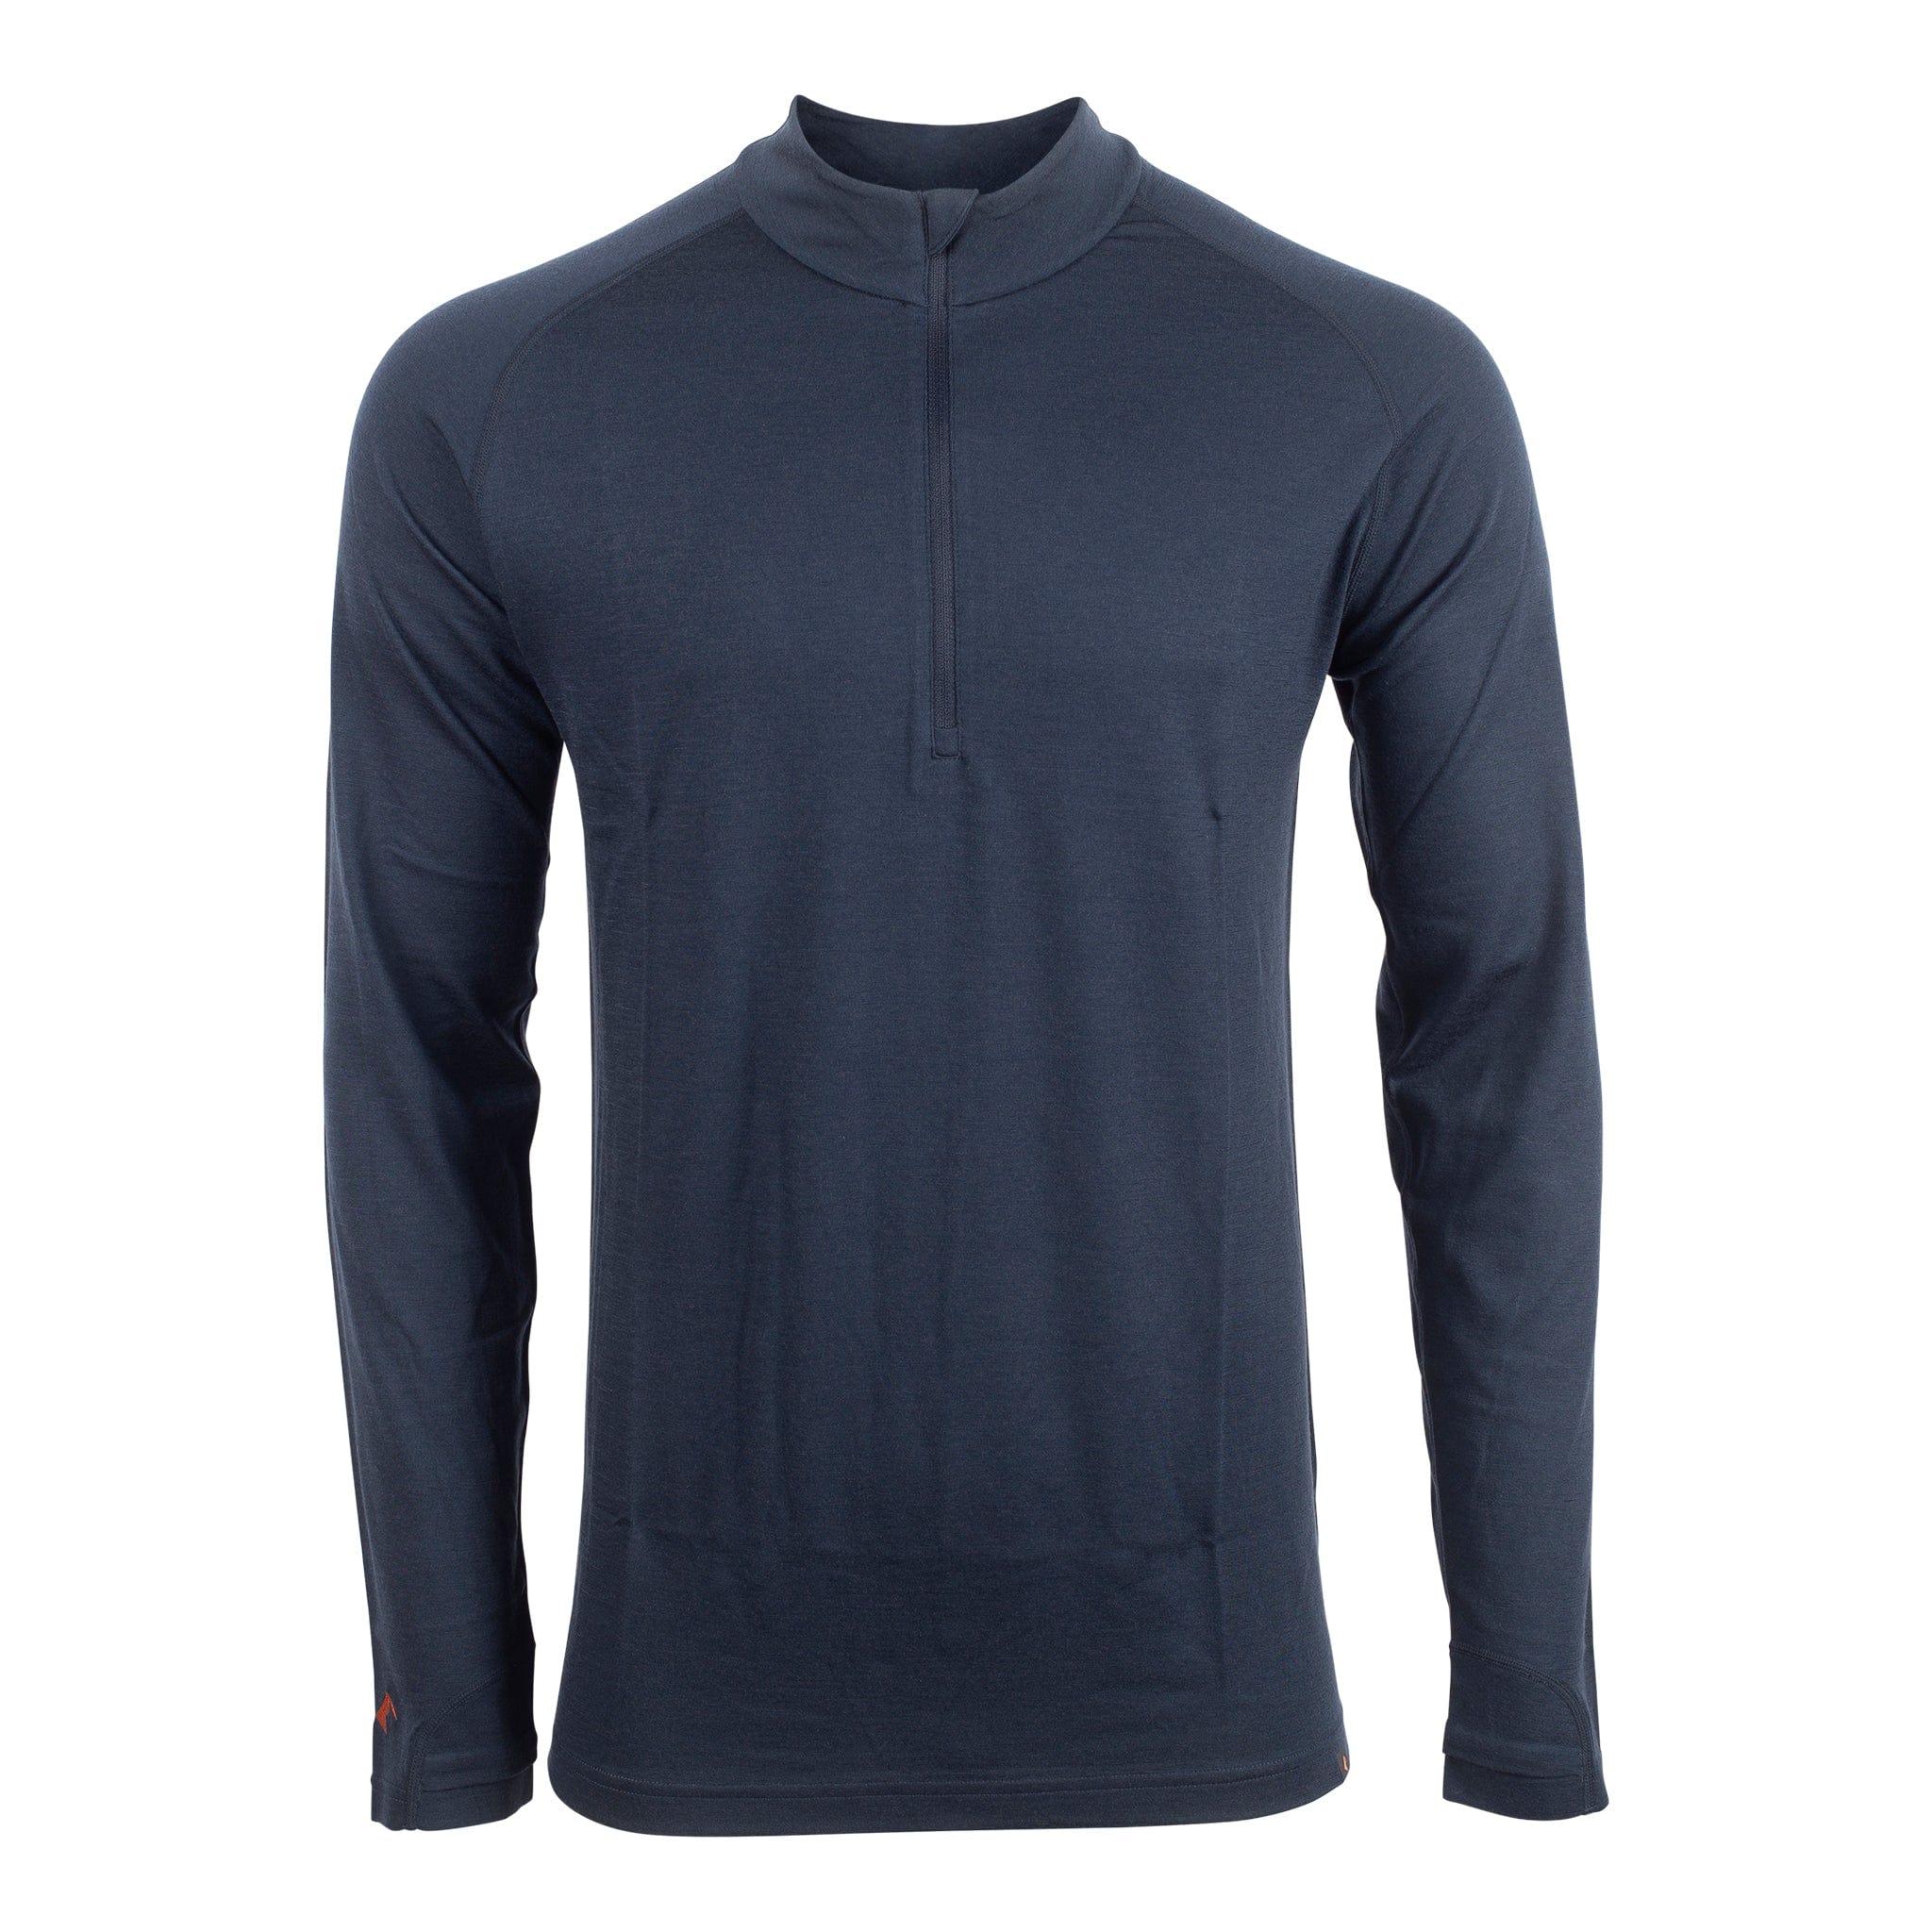 Merino thermal underwear - Men's half-zipper, high-neck top – dark blue